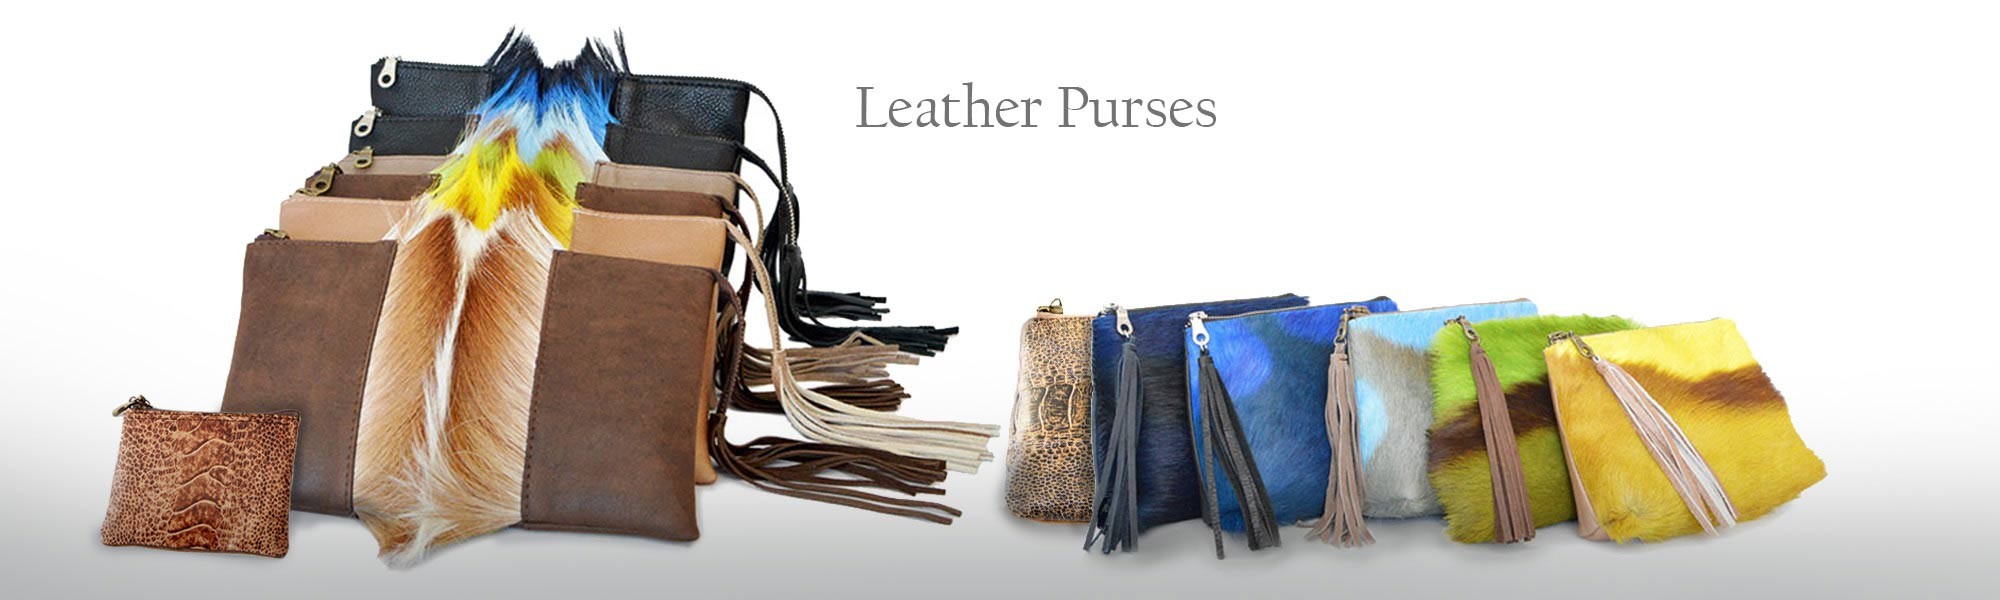 Leather Purses